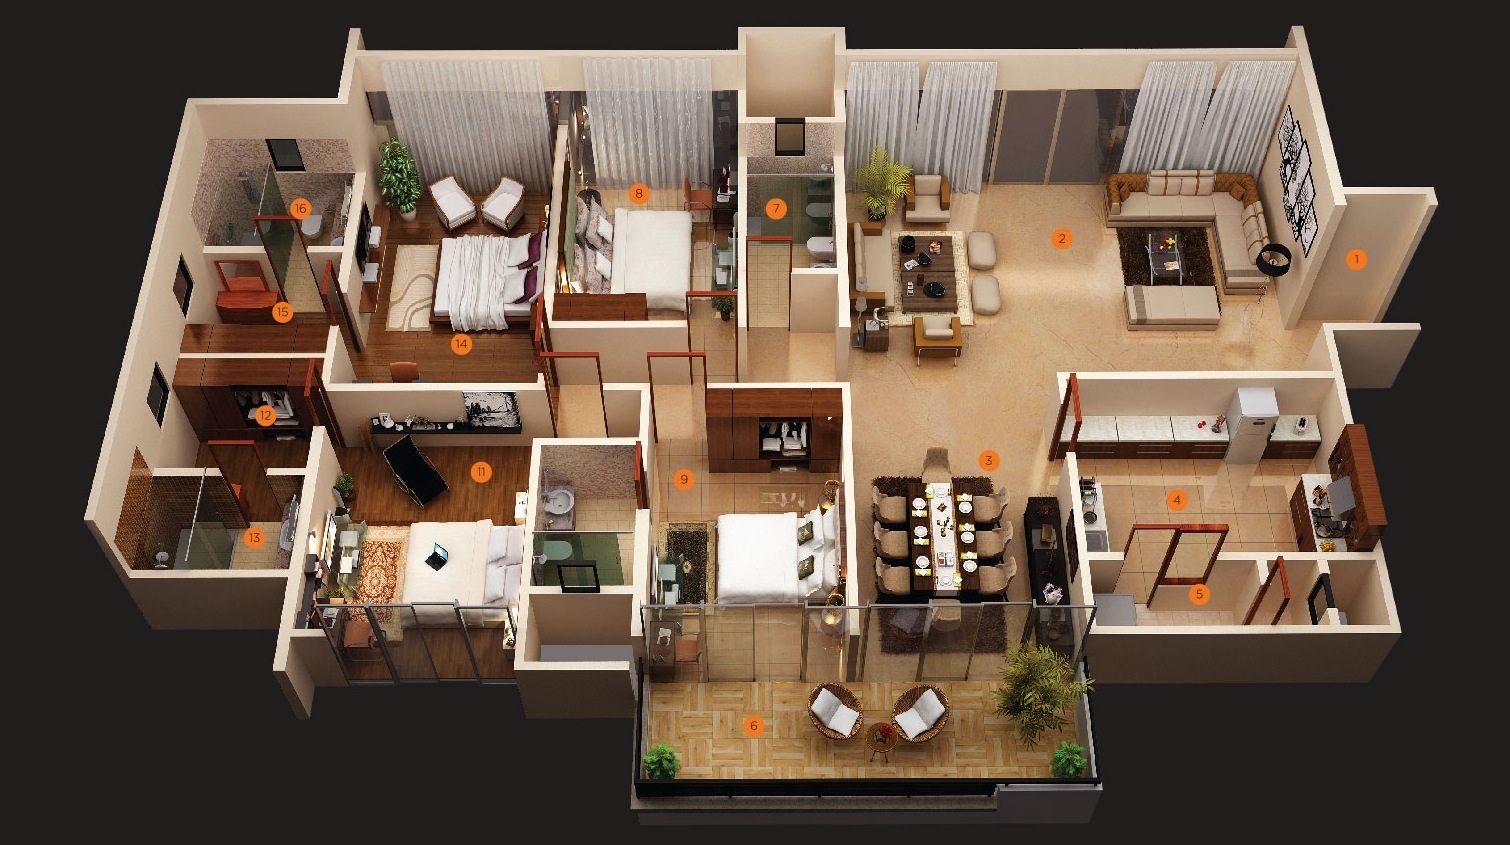 Four-Bedroom-Decor-Ideas.jpeg (Jpeg Image, 1510 × 845 Pixels) - Scaled (71%)